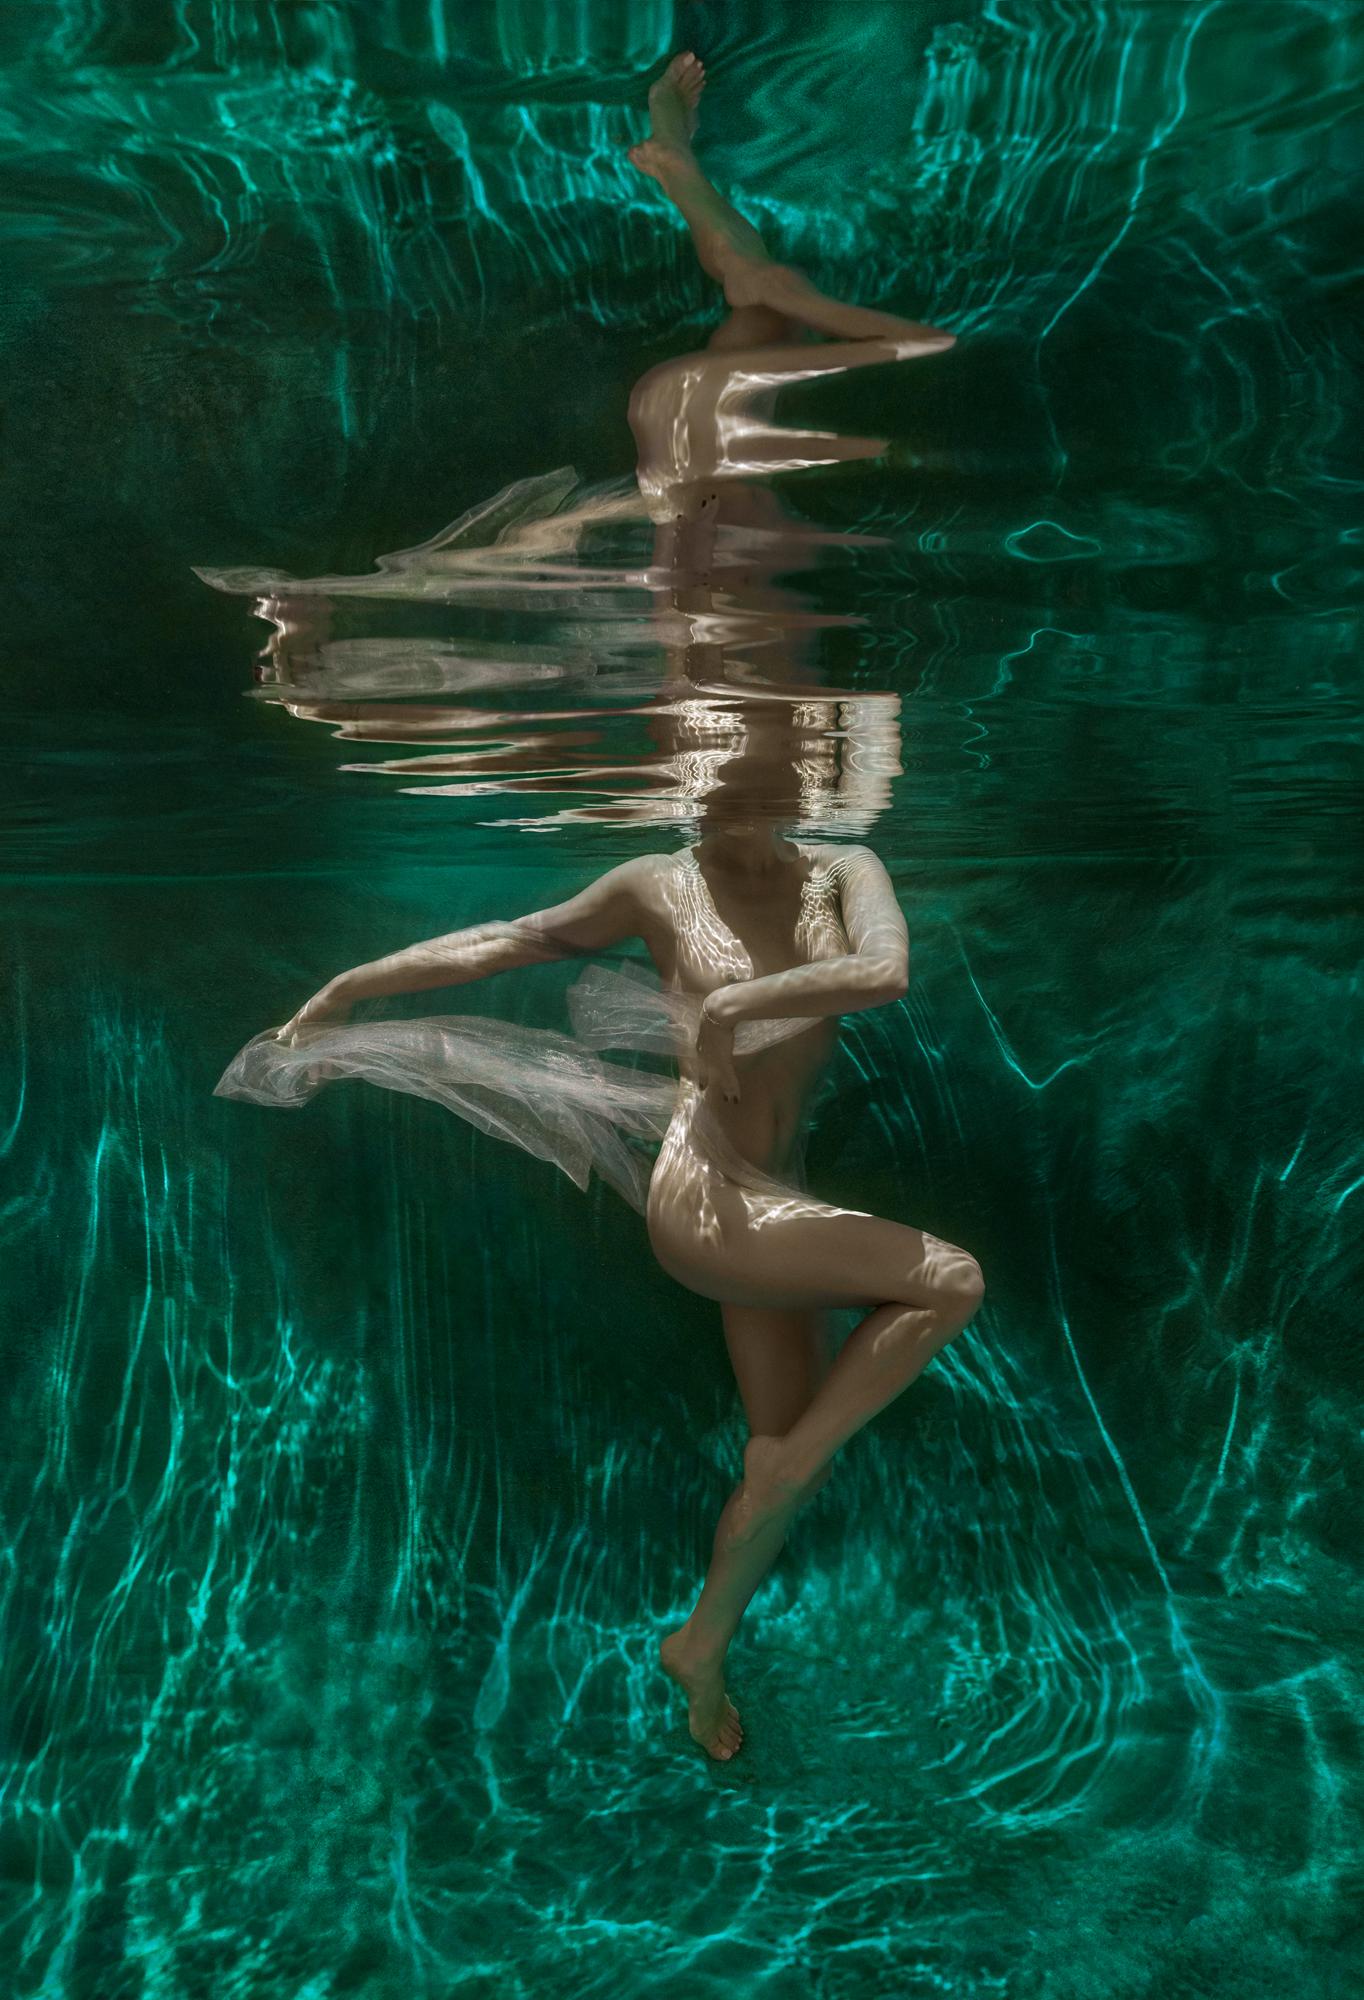 Alex Sher Nude Photograph - Мalachite Cave - underwater photograph - archival pigment print 51" x 35"